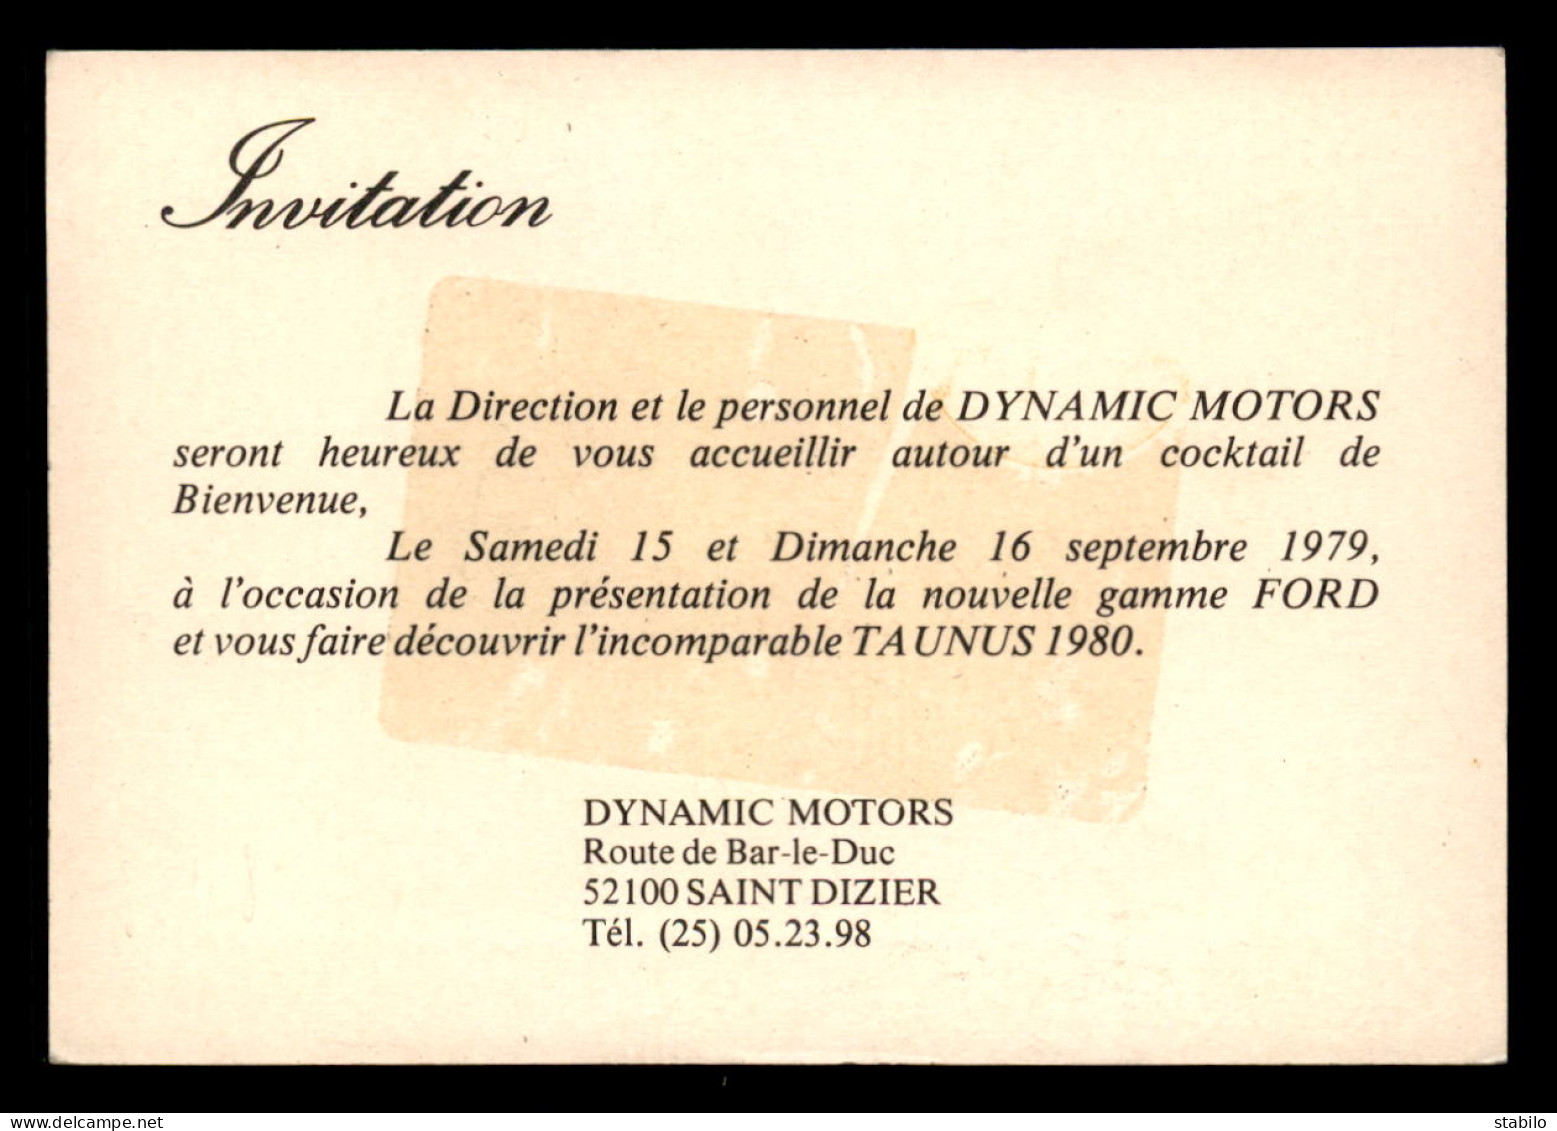 AUTOMOBILES - FORD TAUNUS 1980 - INVITATION DYNAMIC MOTORS SAINT-DIZIER - PKW